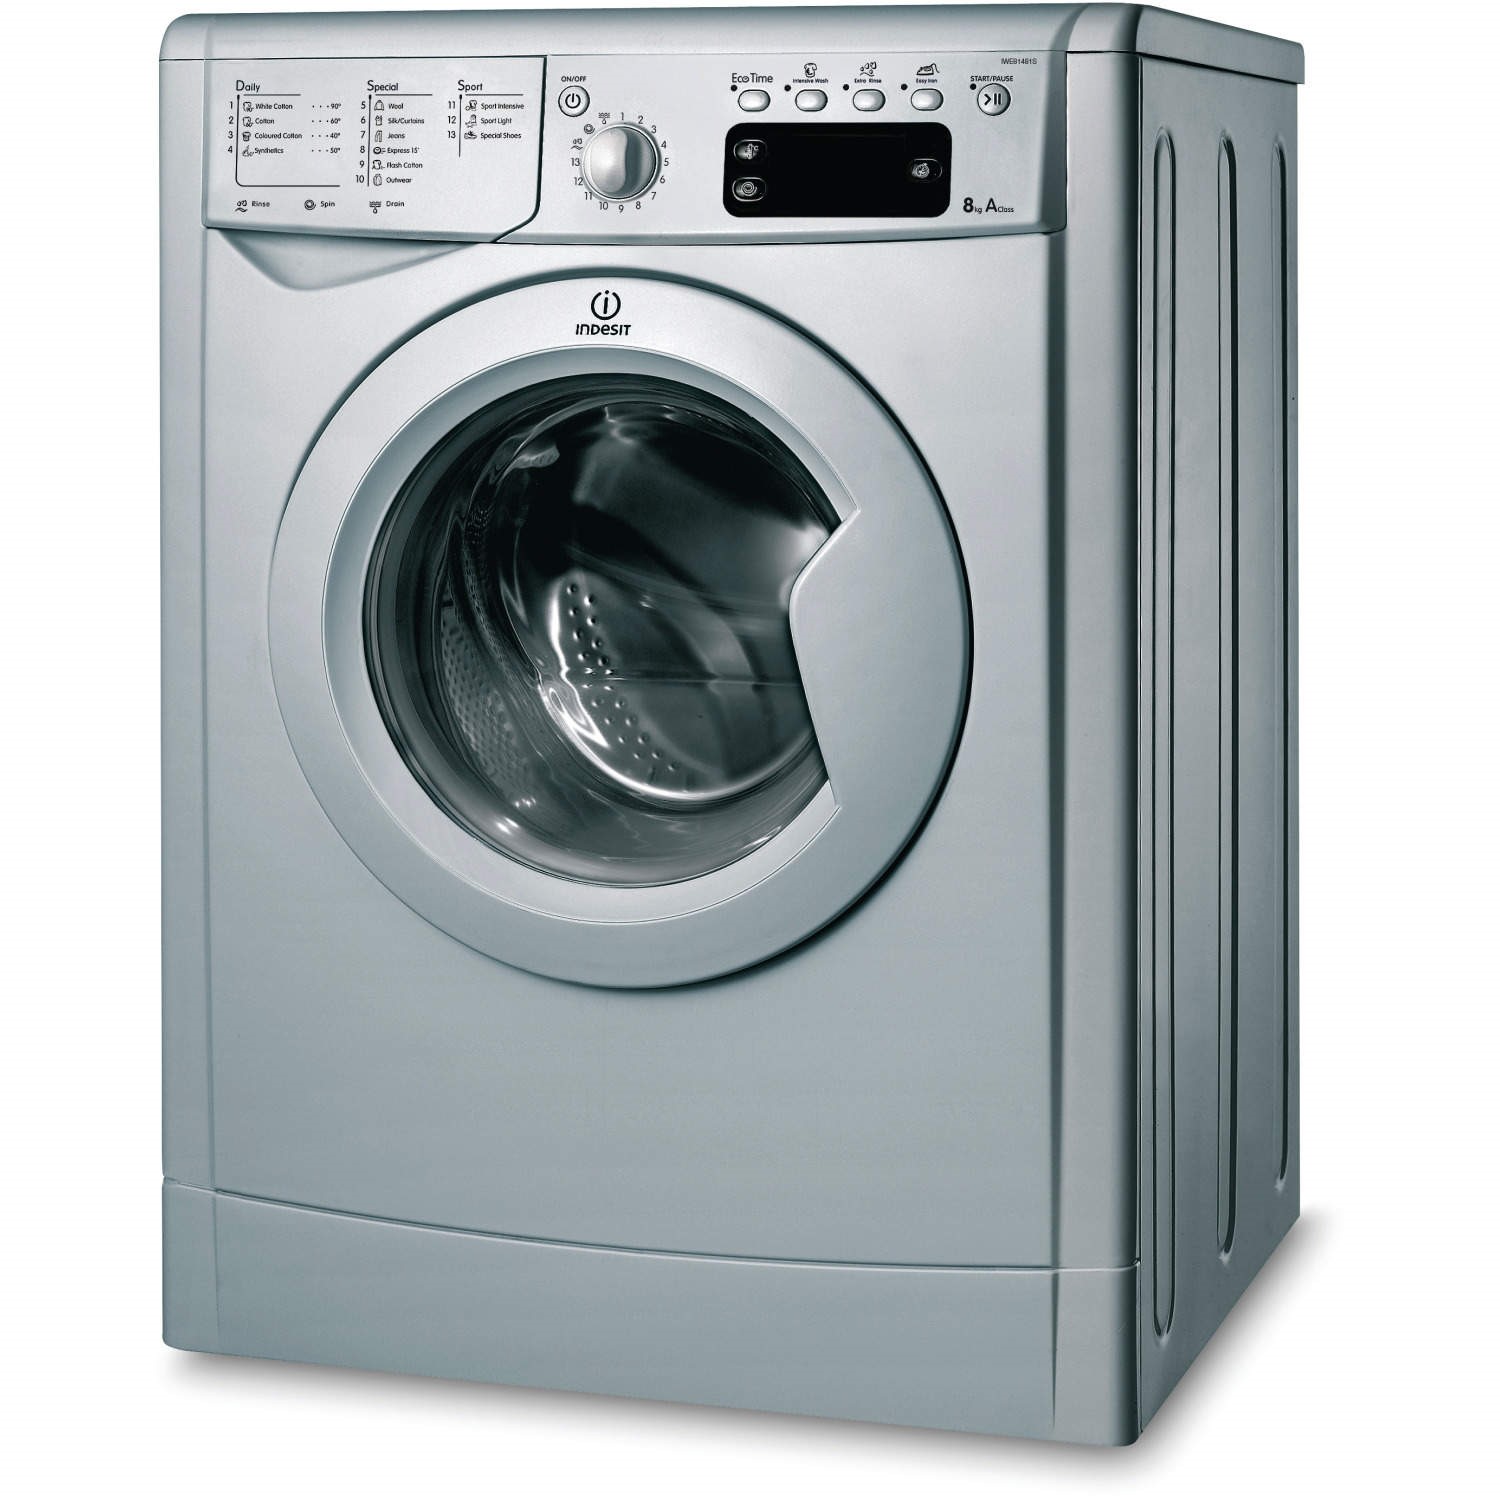 Whirlpool Uk Ltd FWG81496S 1400rpm Washing Machine 8kg Load Class A++ Silver